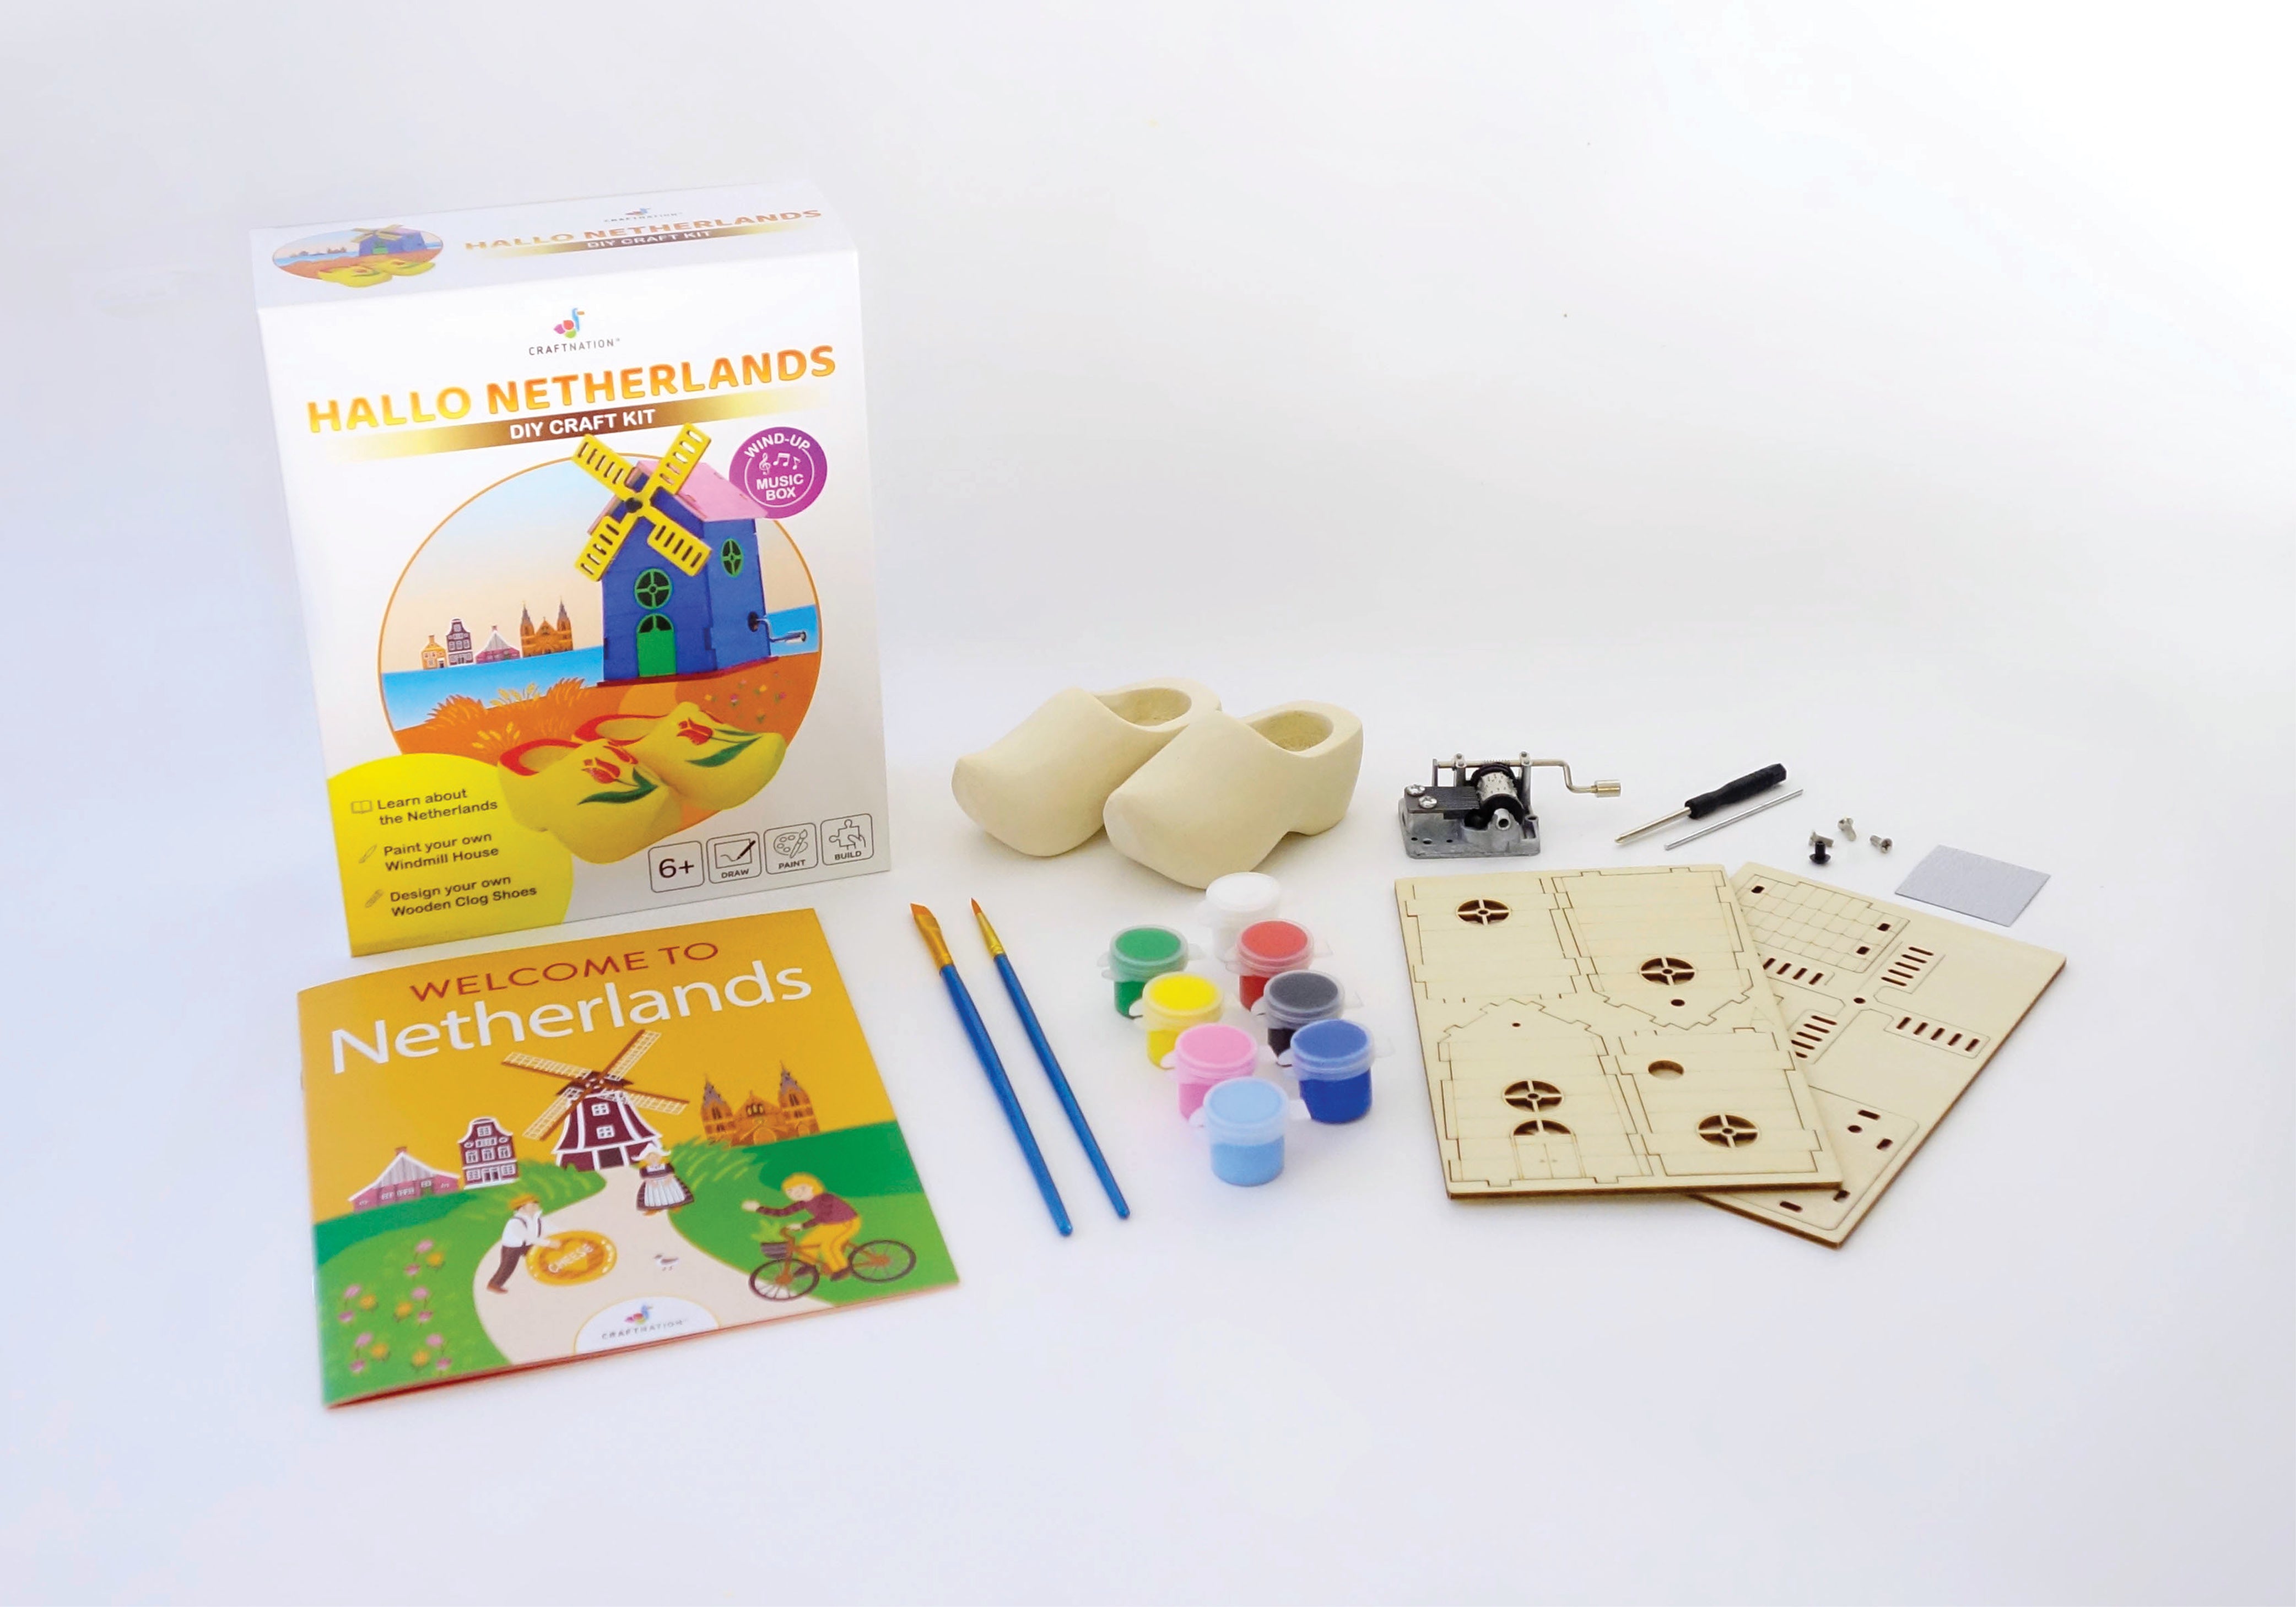 Hallo Netherlands Craft Kit